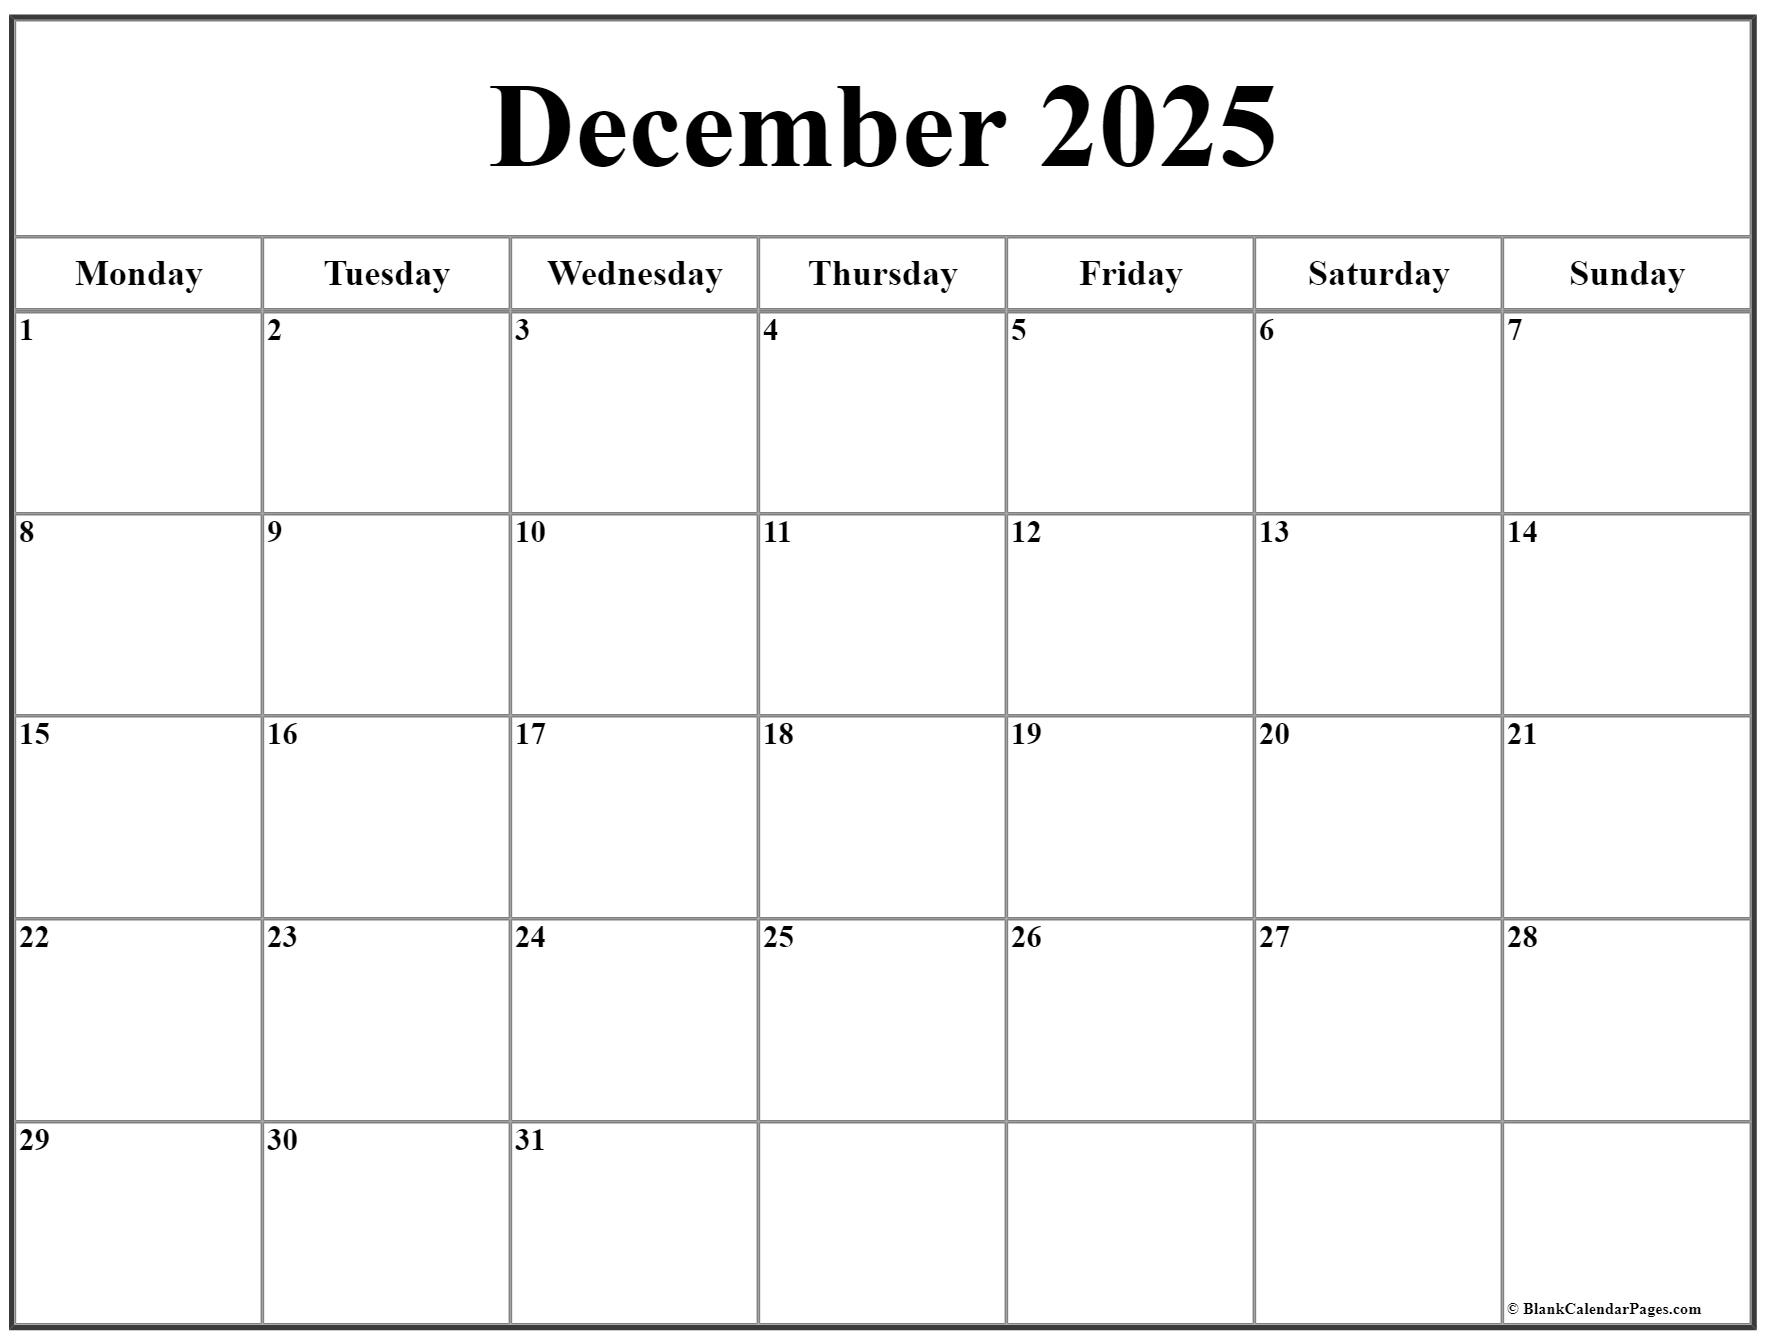 December monday calendar monday to sunday